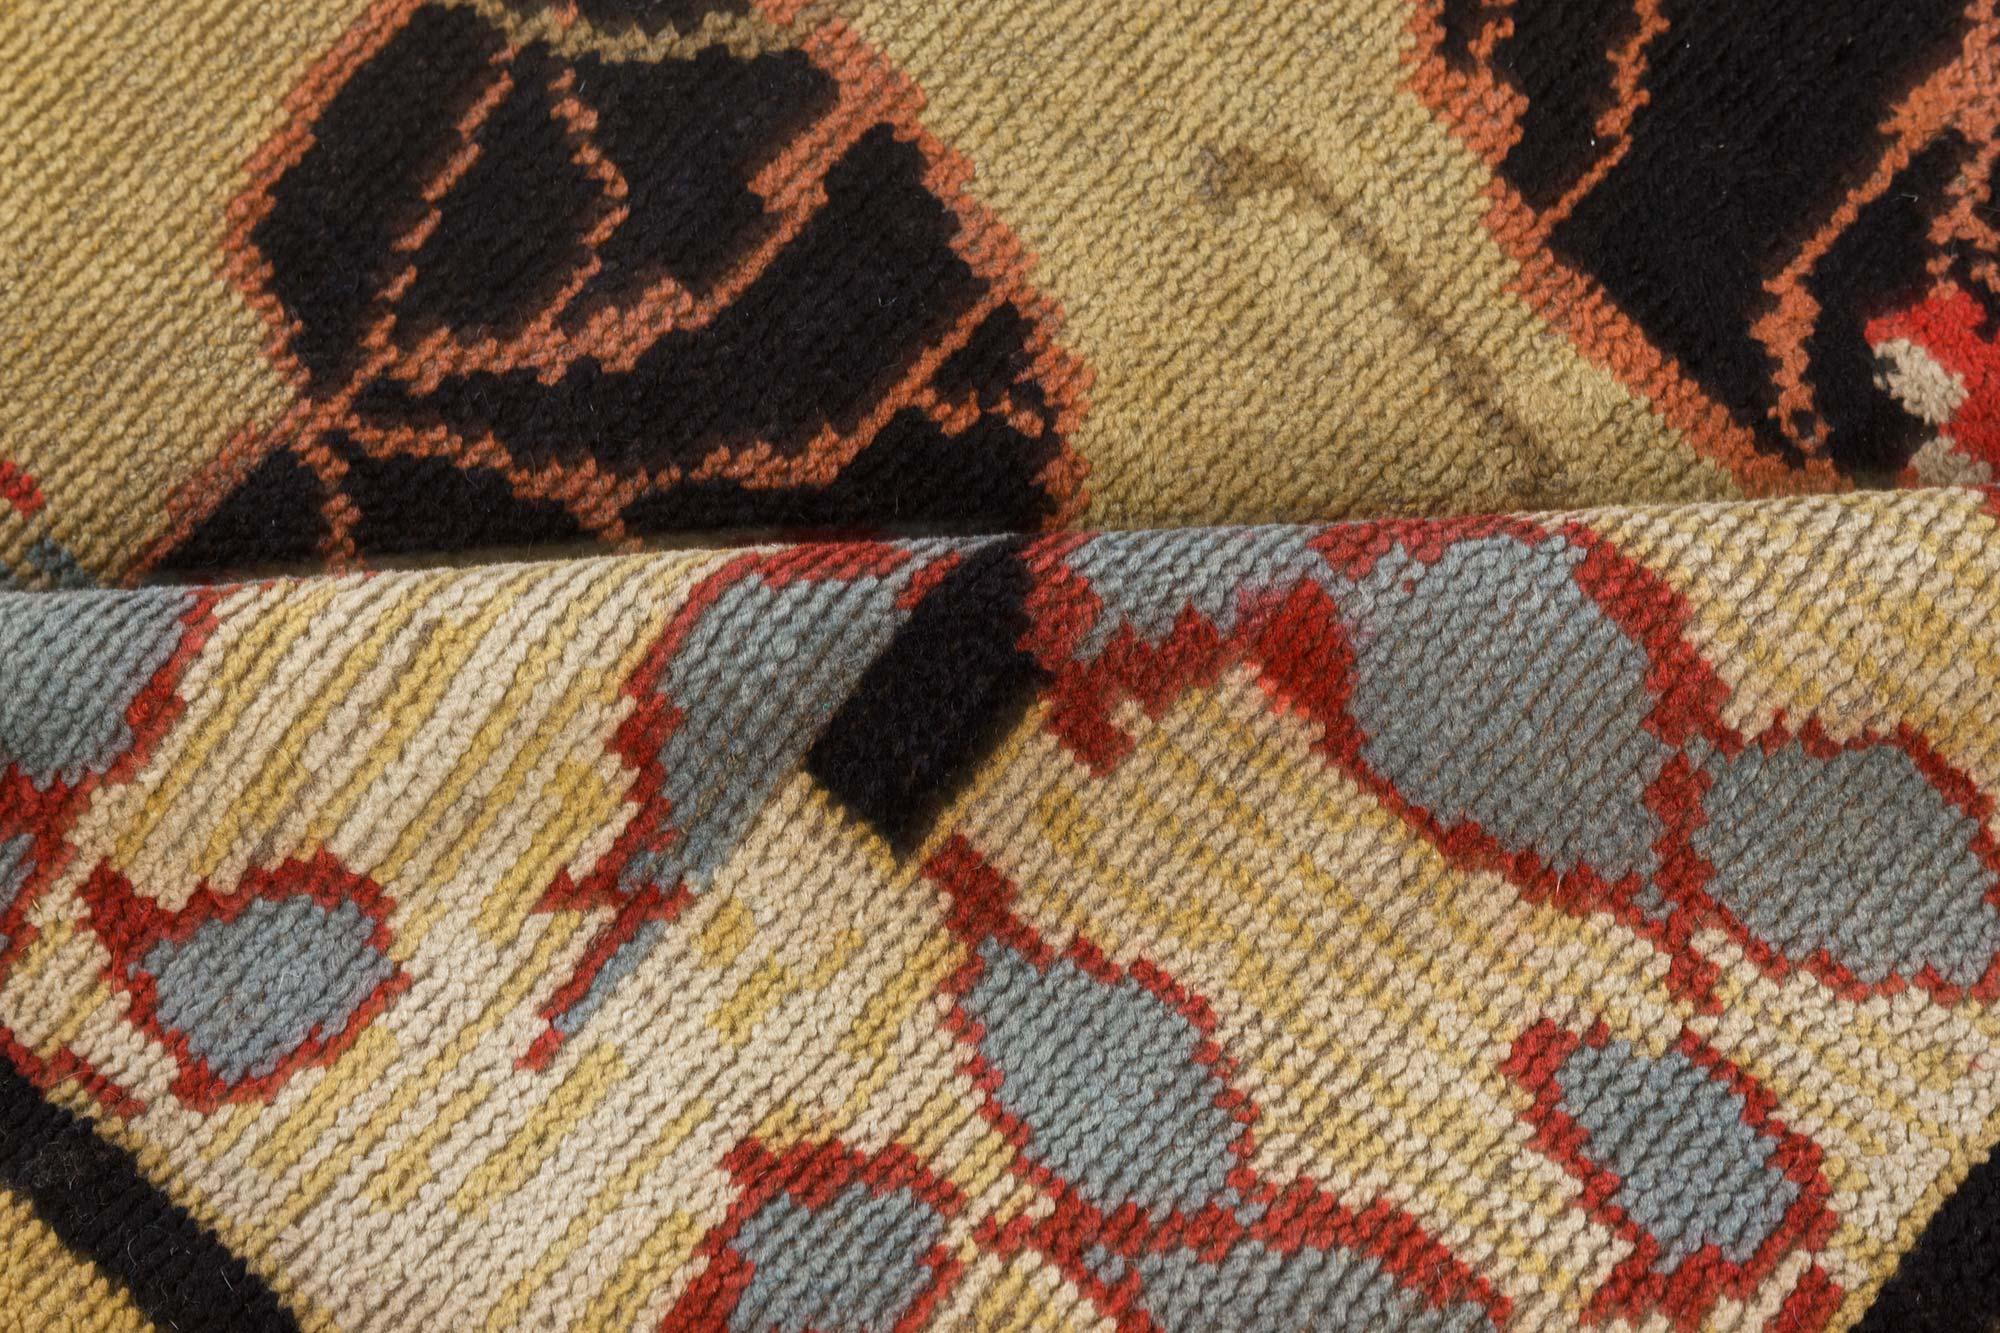 One-of-a-kind Vintage Irish Botanic Hand Knotted Wool Carpet
Size: 8'8